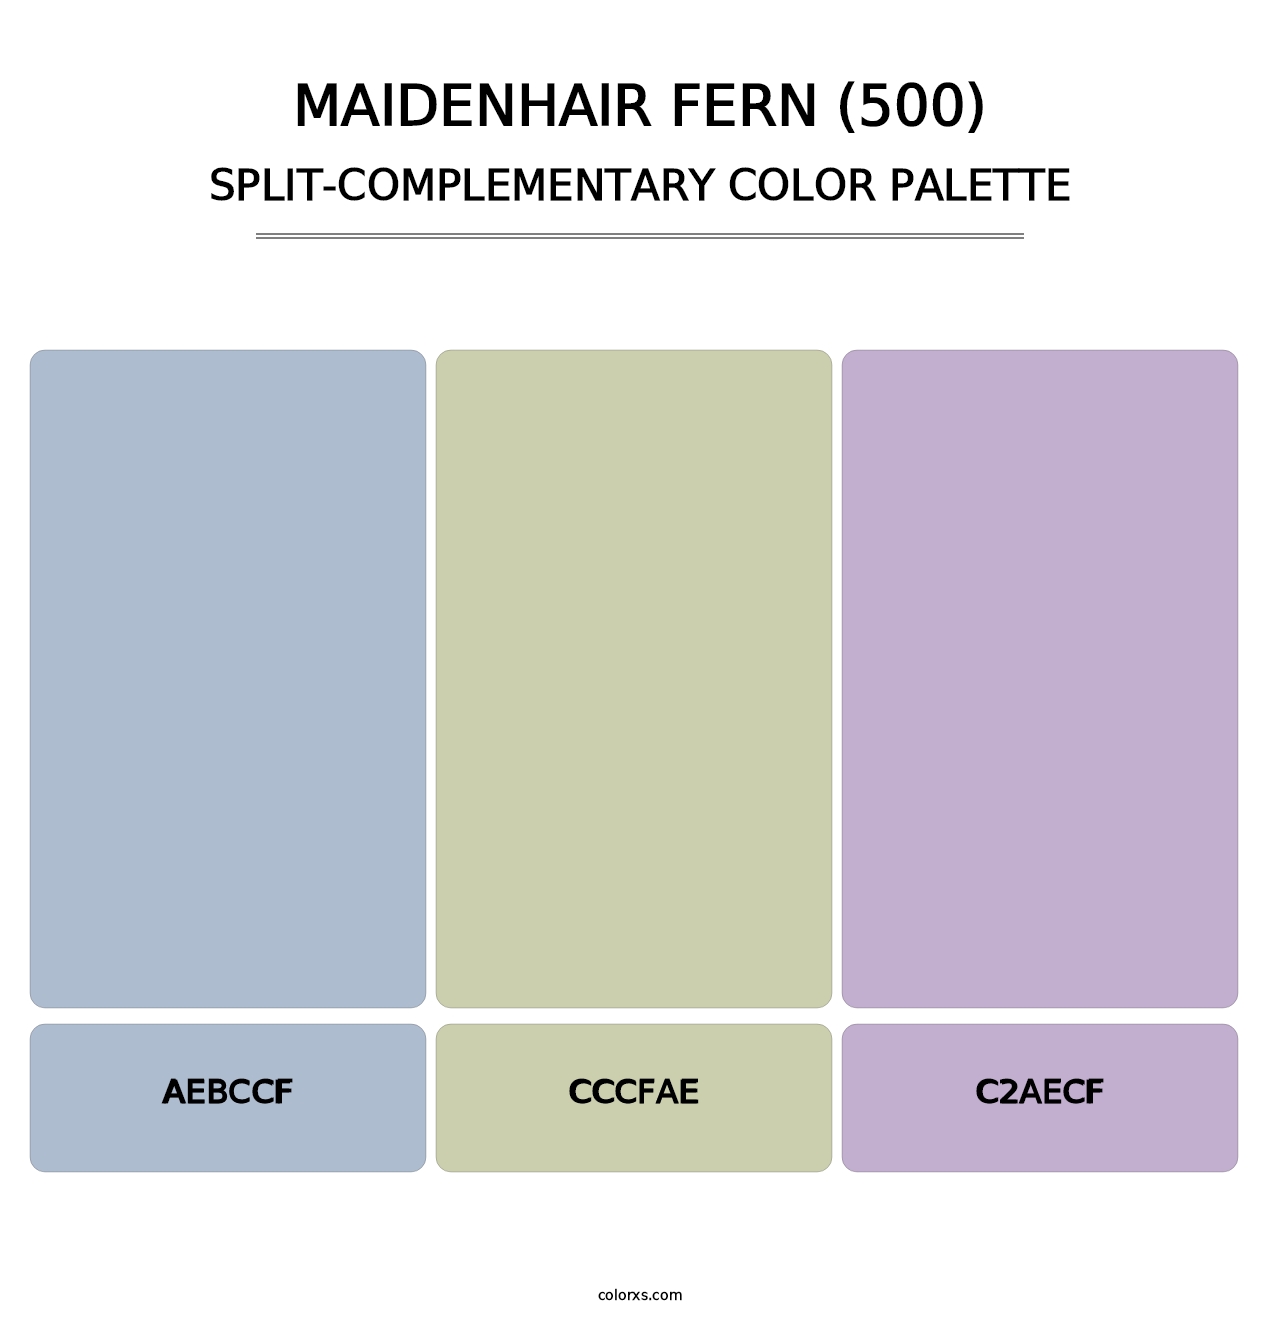 Maidenhair Fern (500) - Split-Complementary Color Palette